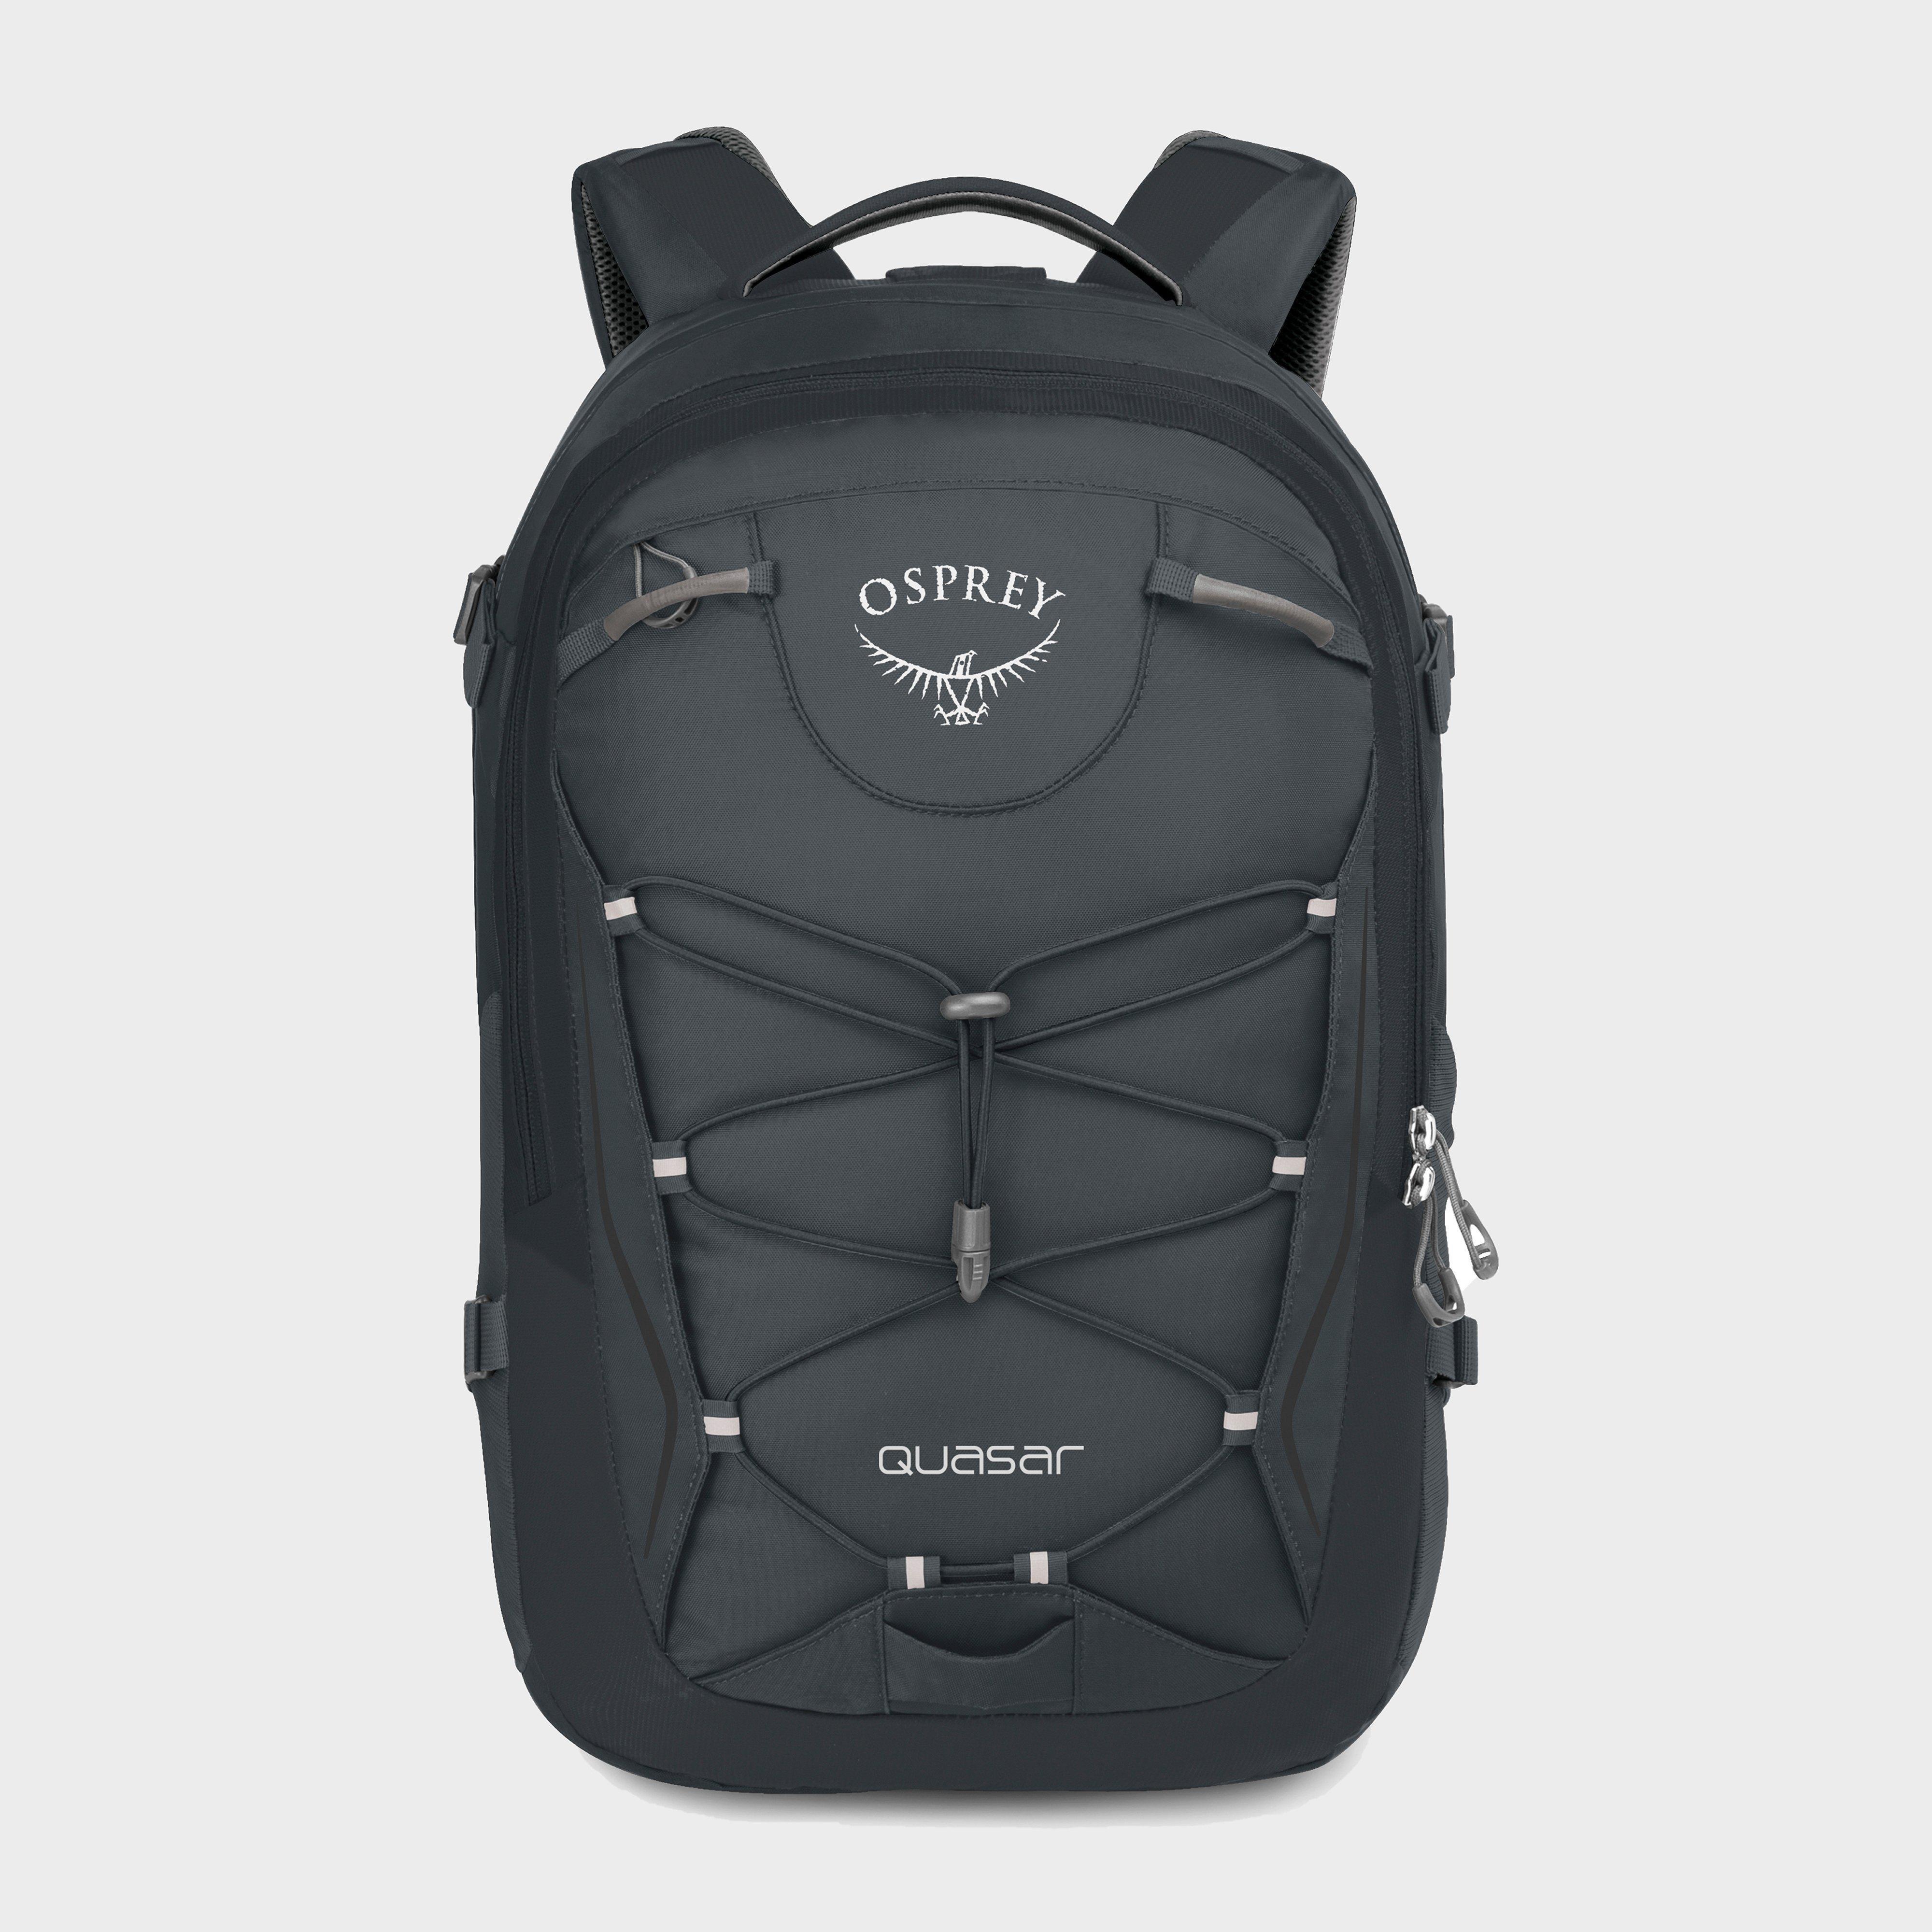 Osprey Quasar 28 Backpack Review